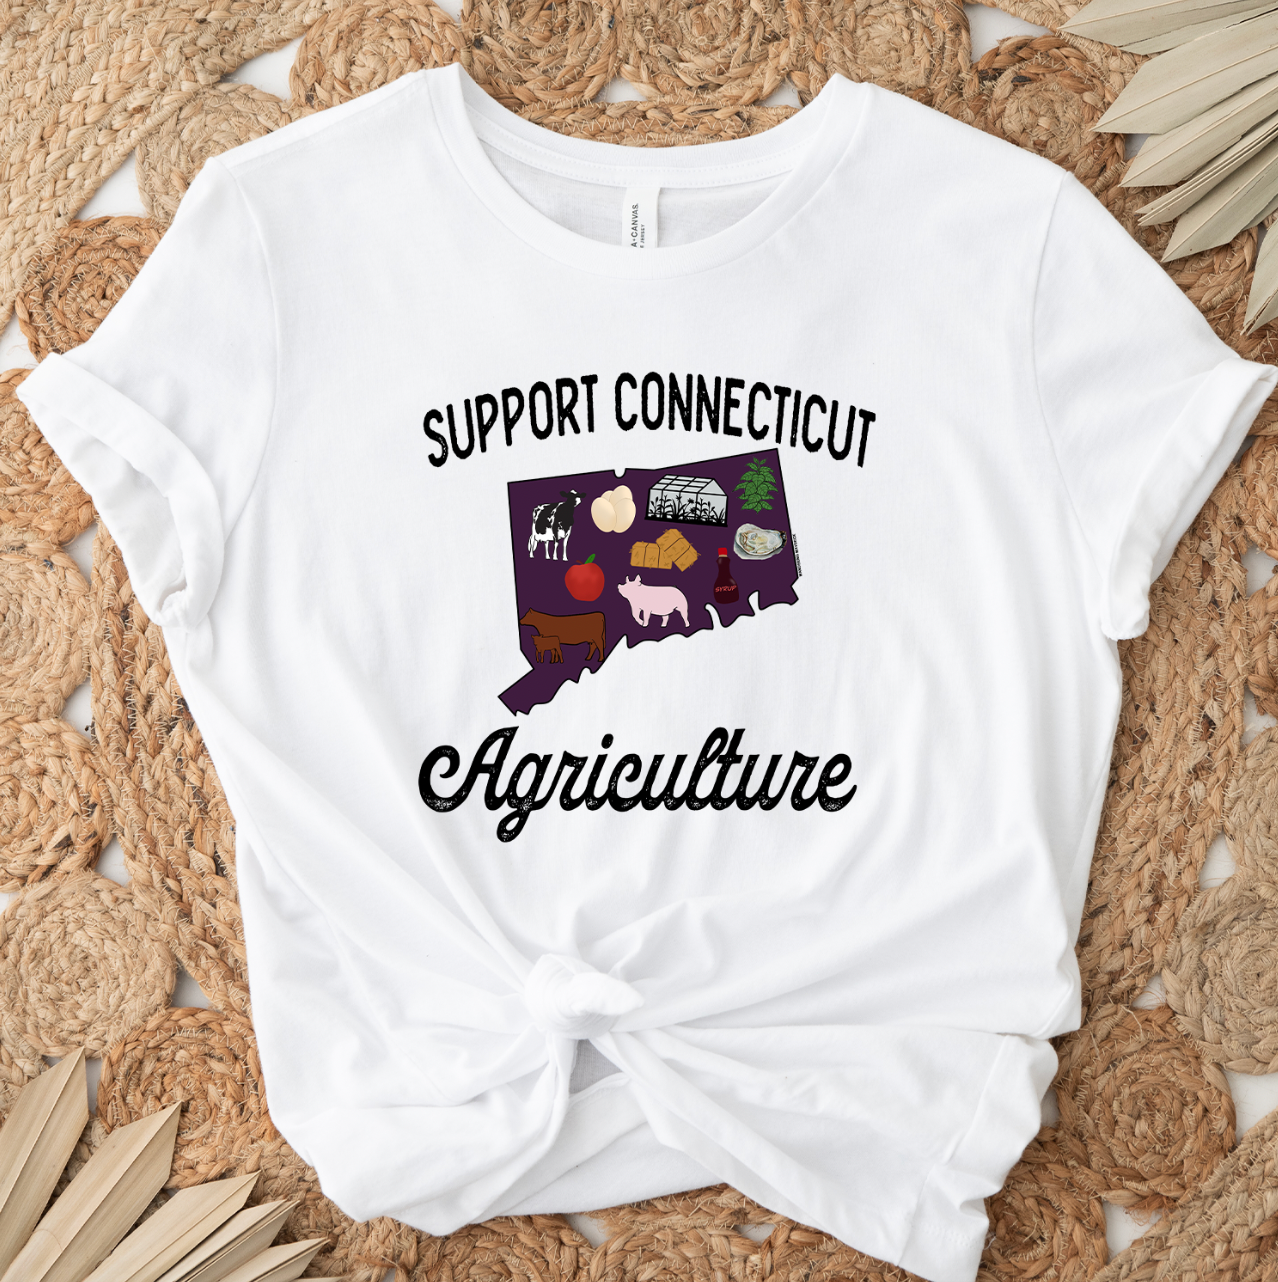 Support Connecticut Agriculture T-Shirt (XS-4XL) - Multiple Colors!